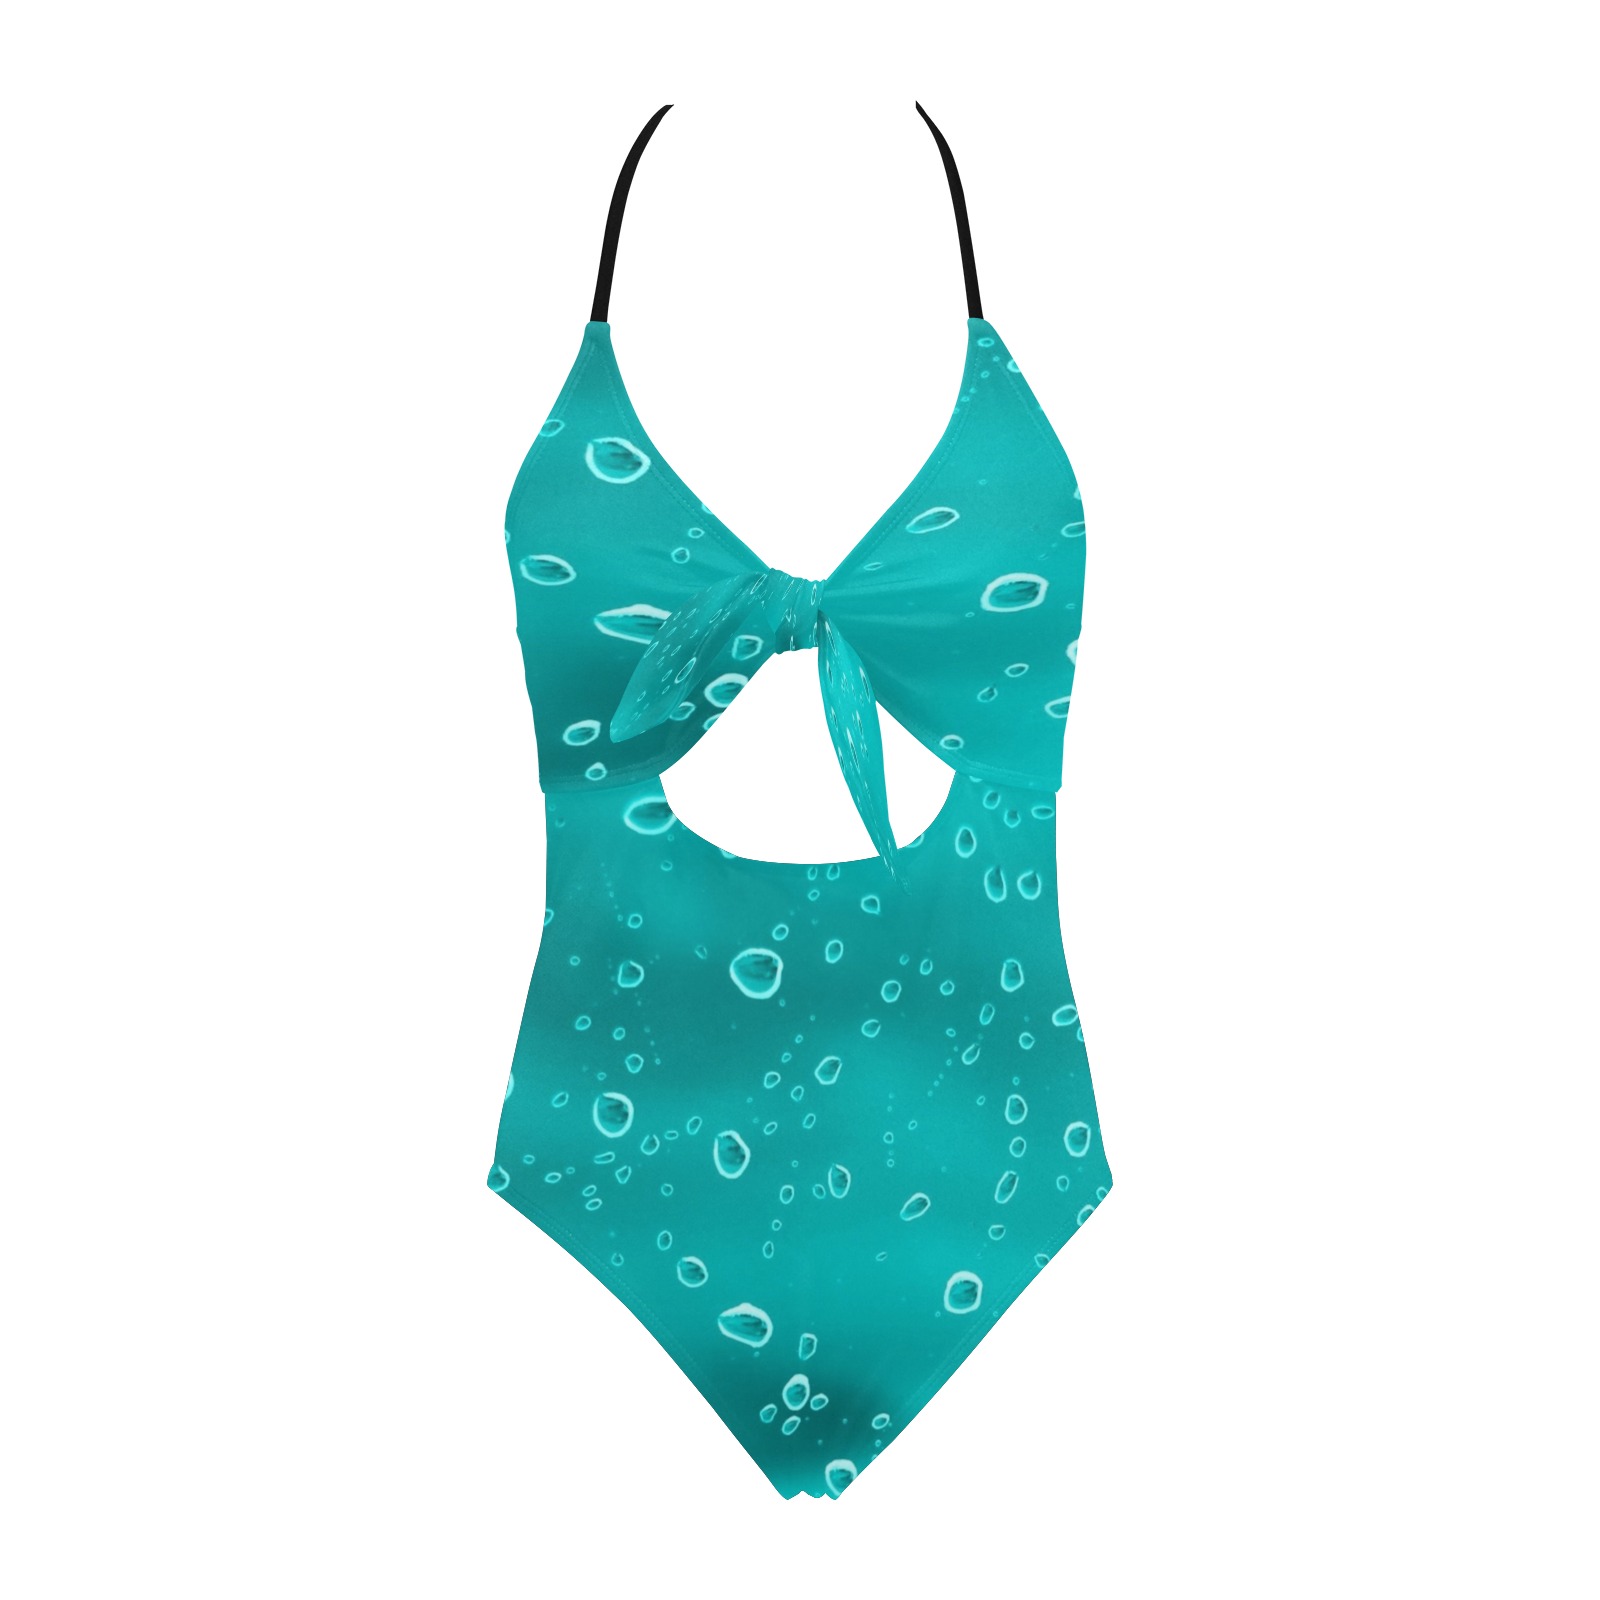 Aqua Bubbles Bow Tie Swimsuit Backless Hollow Out Bow Tie Swimsuit (Model S17)